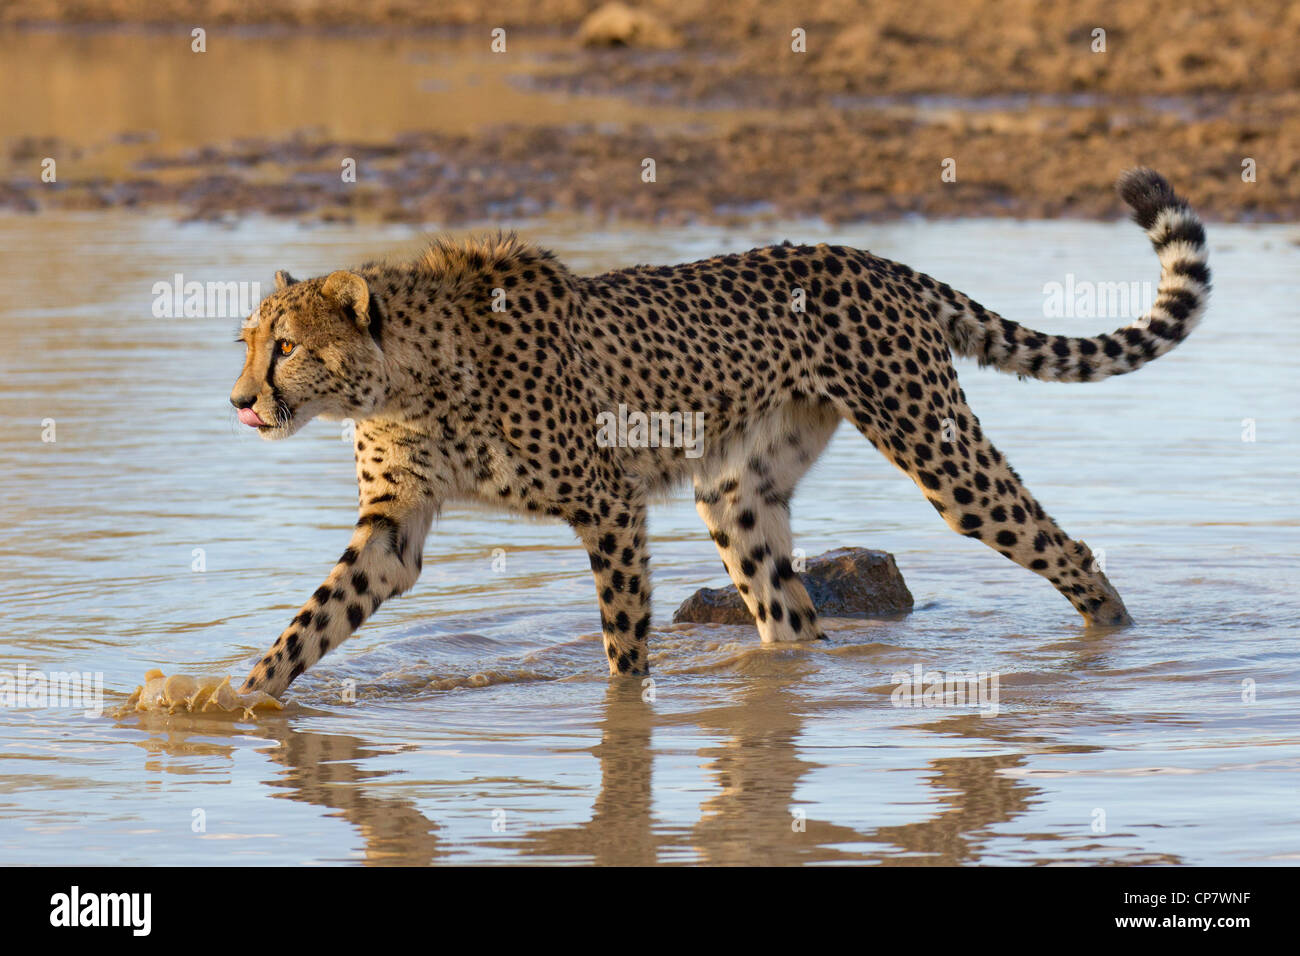 Cheetah, (Acinonyx jubatus) walking through water in South Africa Stock Photo